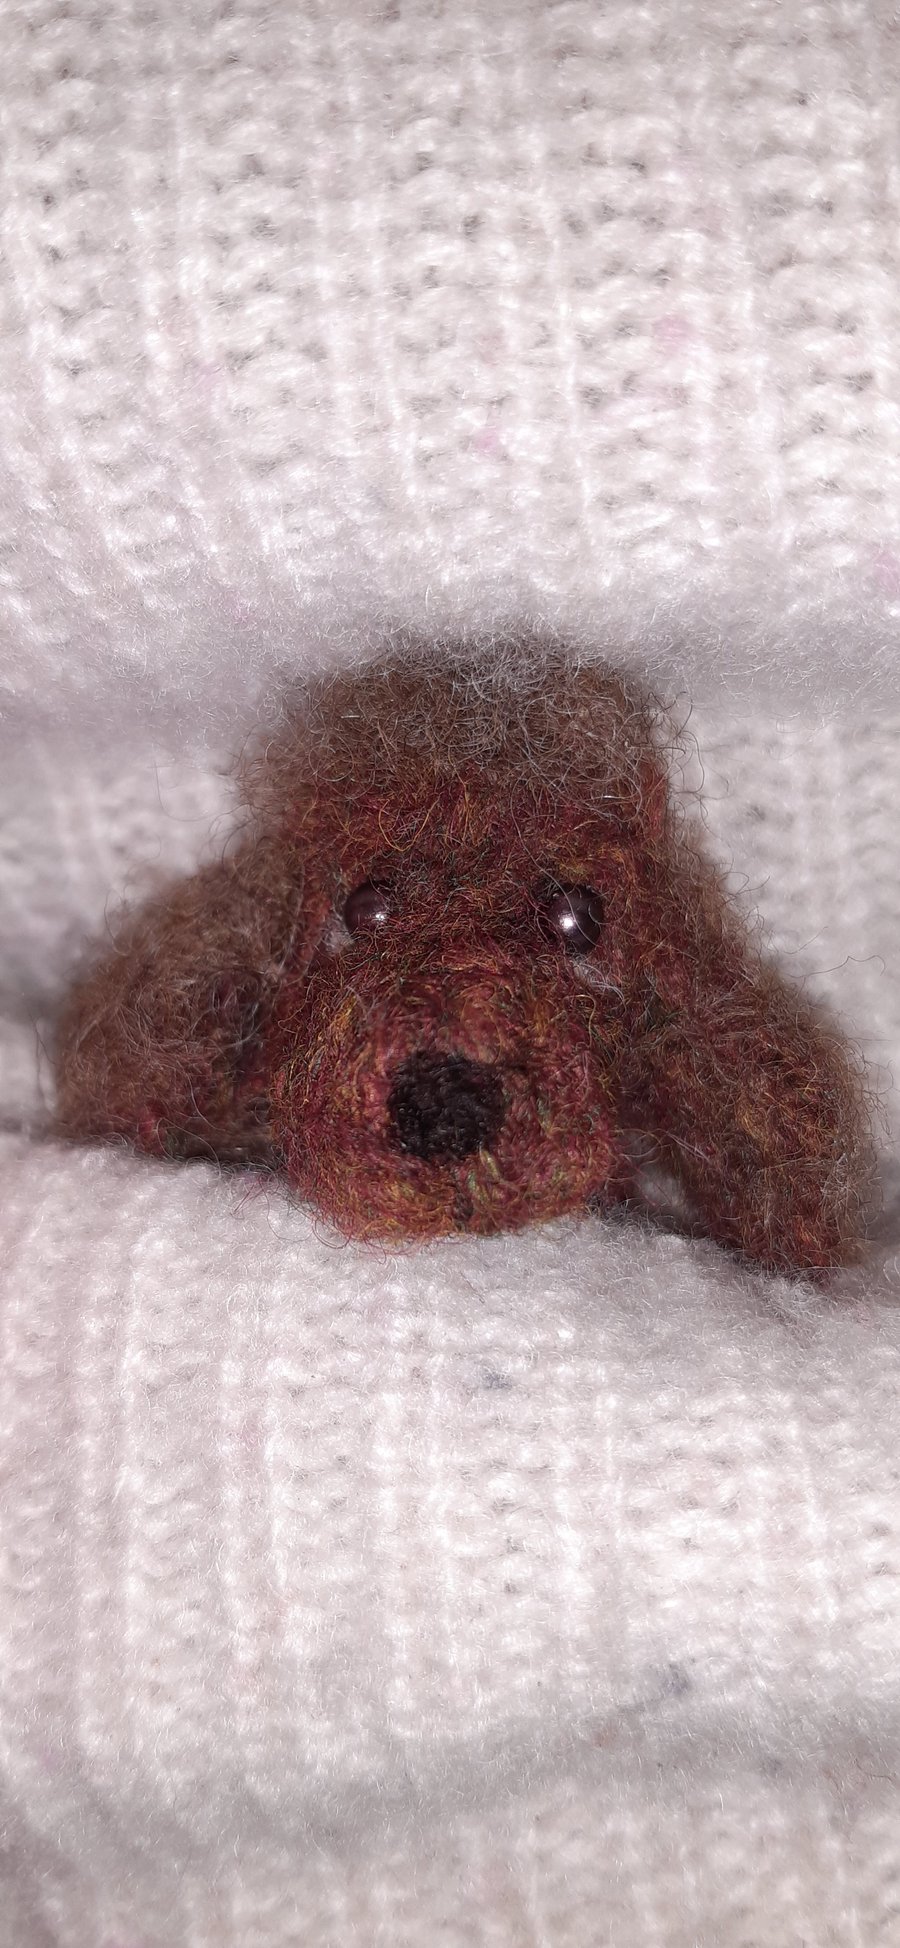 Chocolate Poodle dog brooch